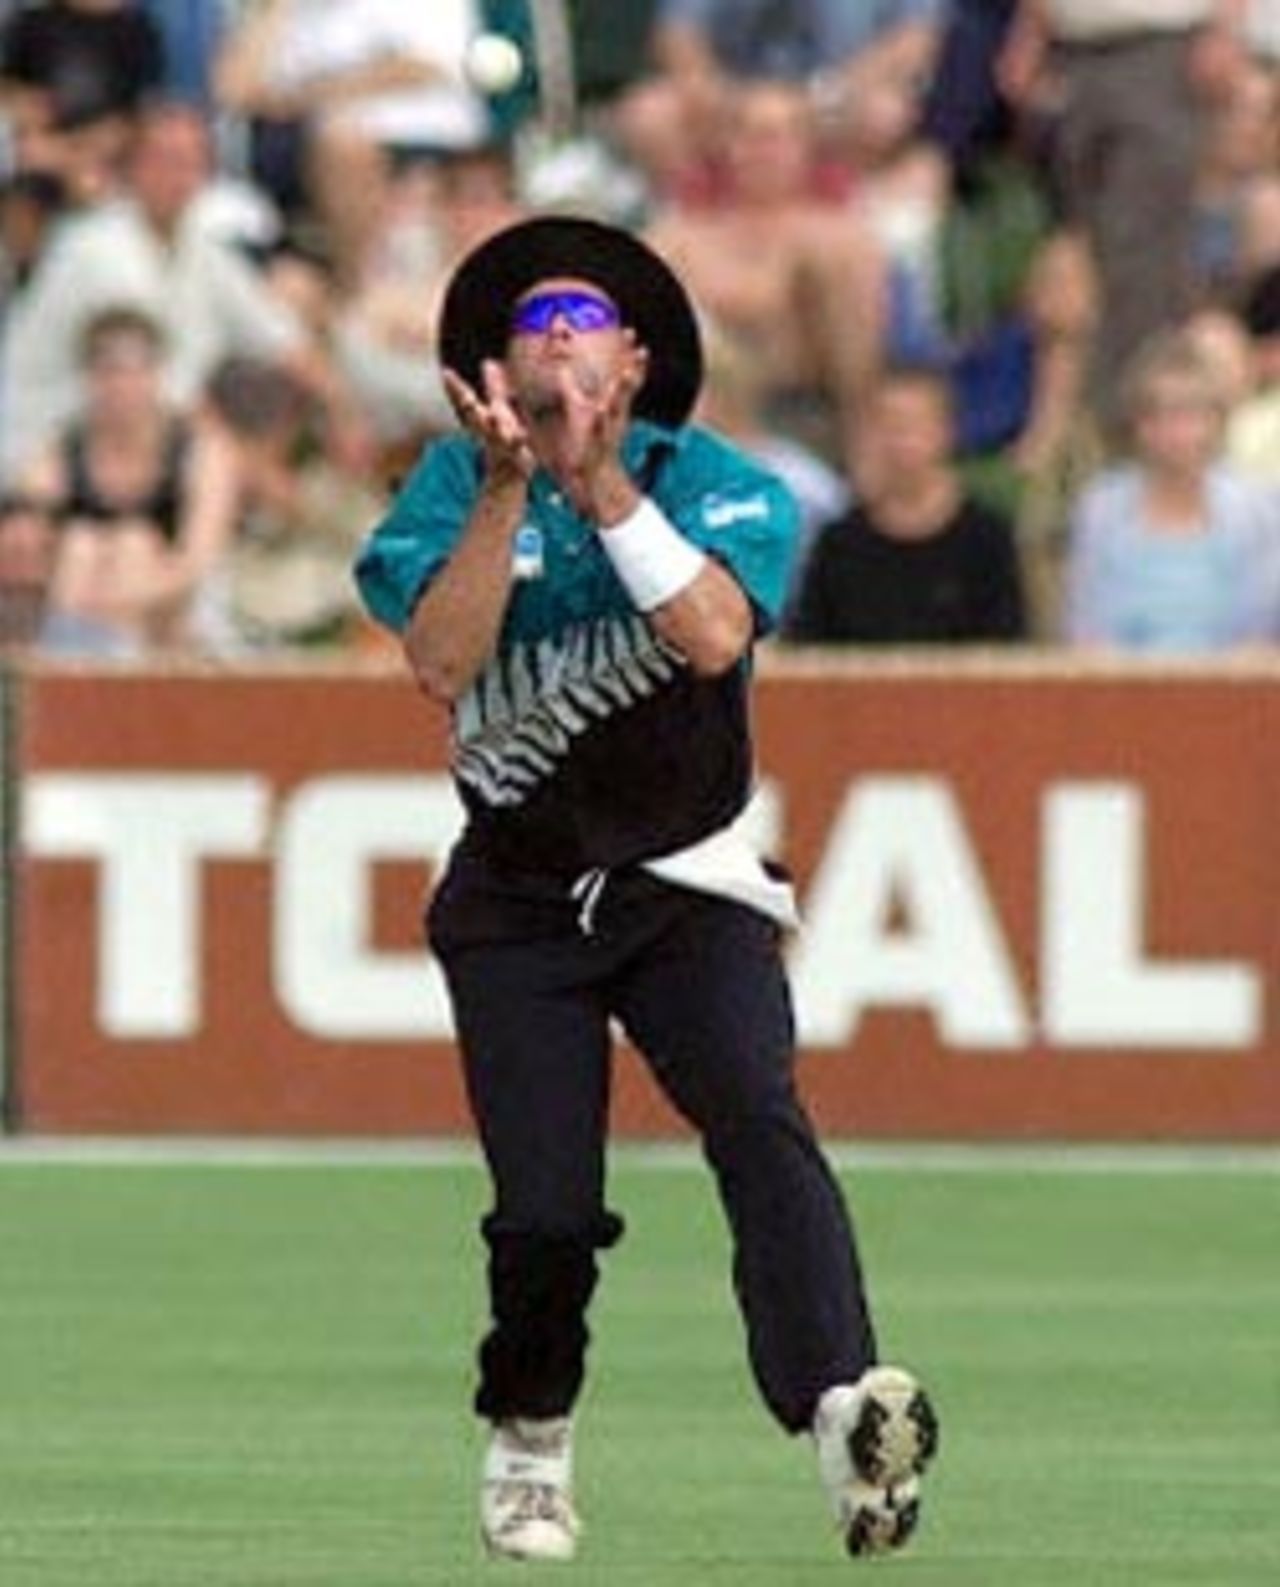 Cairns about to catch Kirsten. New Zealand in South Africa 2000/01, 1st ODI, South Africa v New Zealand North West Cricket Stadium, Potchefstroom, 20 October 2000